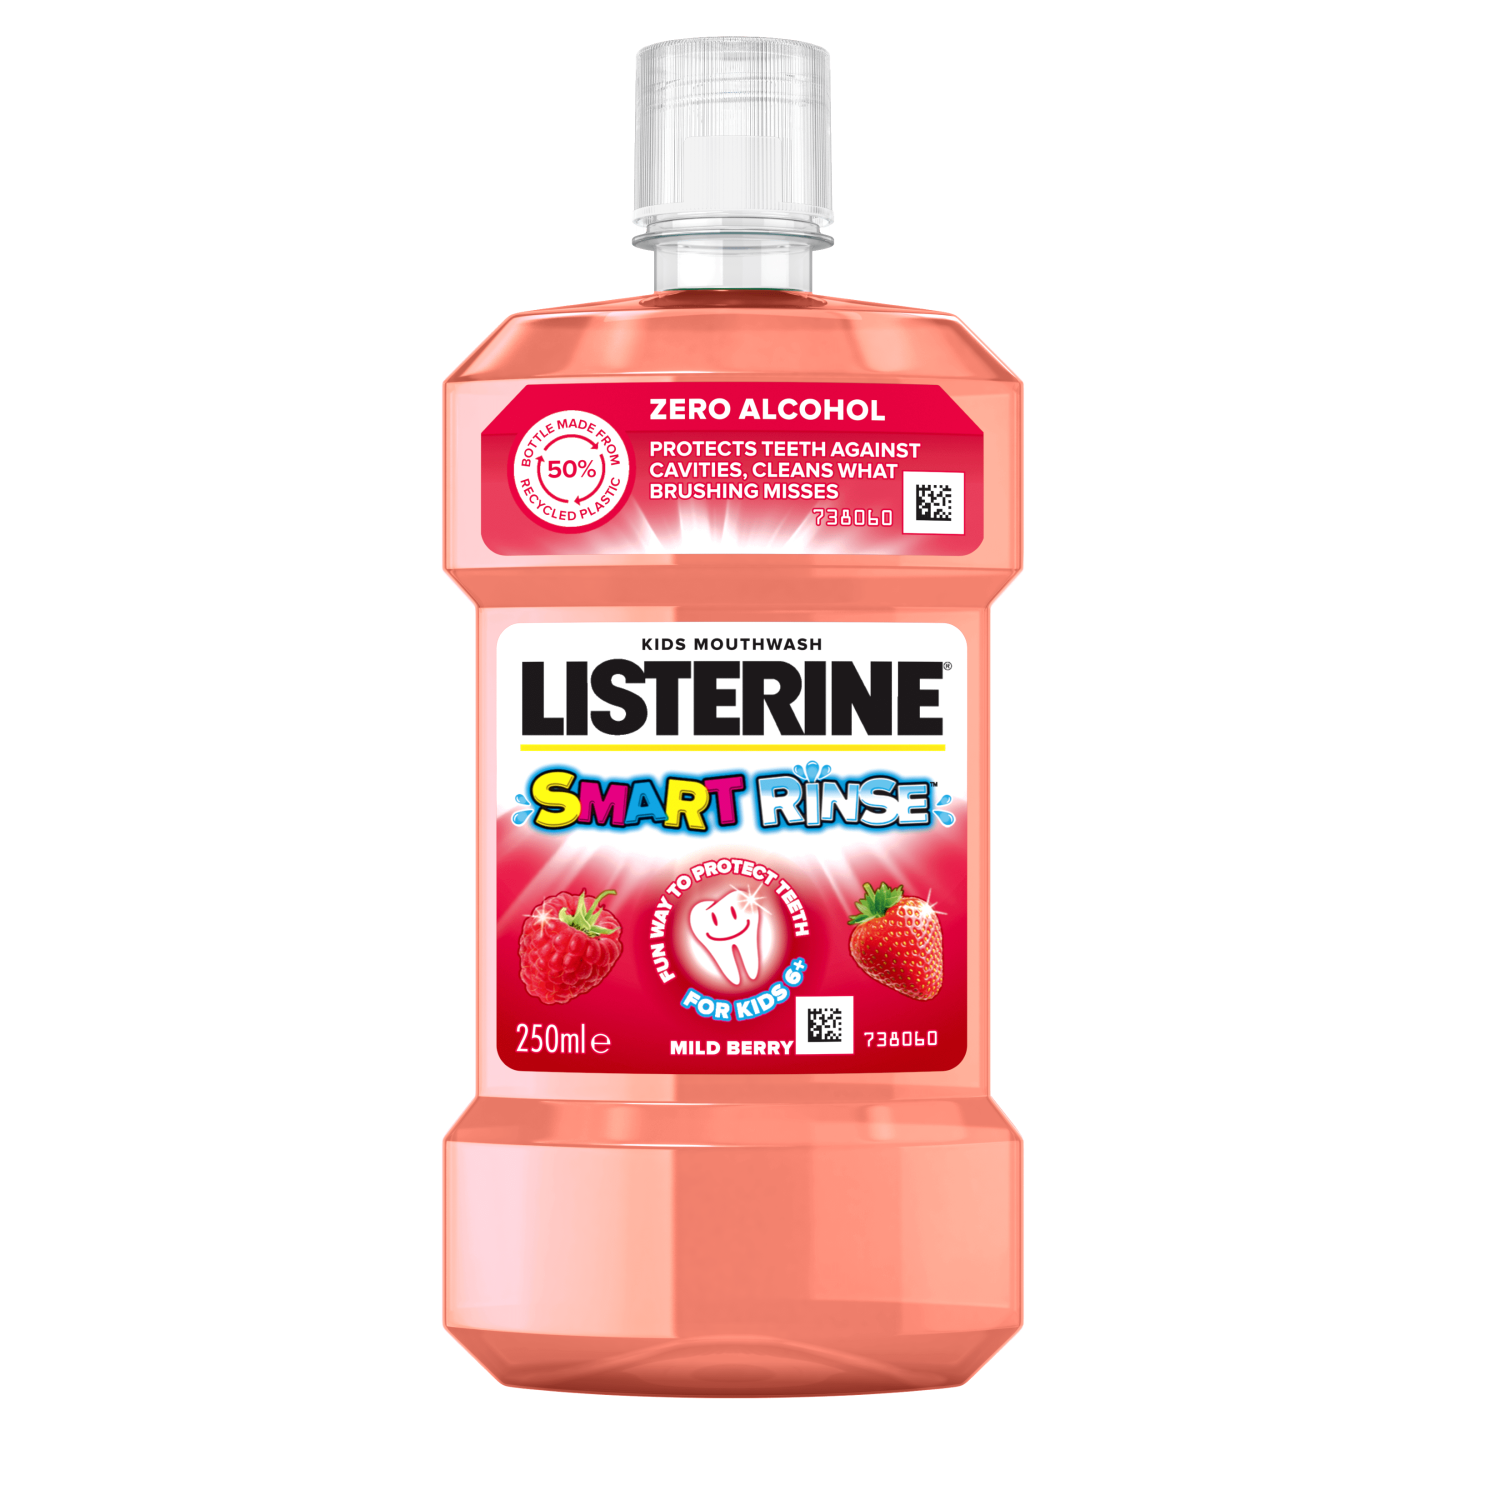 Listerine Smart Rinse Mild Berry 250ml For Kids 6+ termékfotó, Zero Alcohol és Protects teeth against cavities, cleans what brushing misses feliratokkal